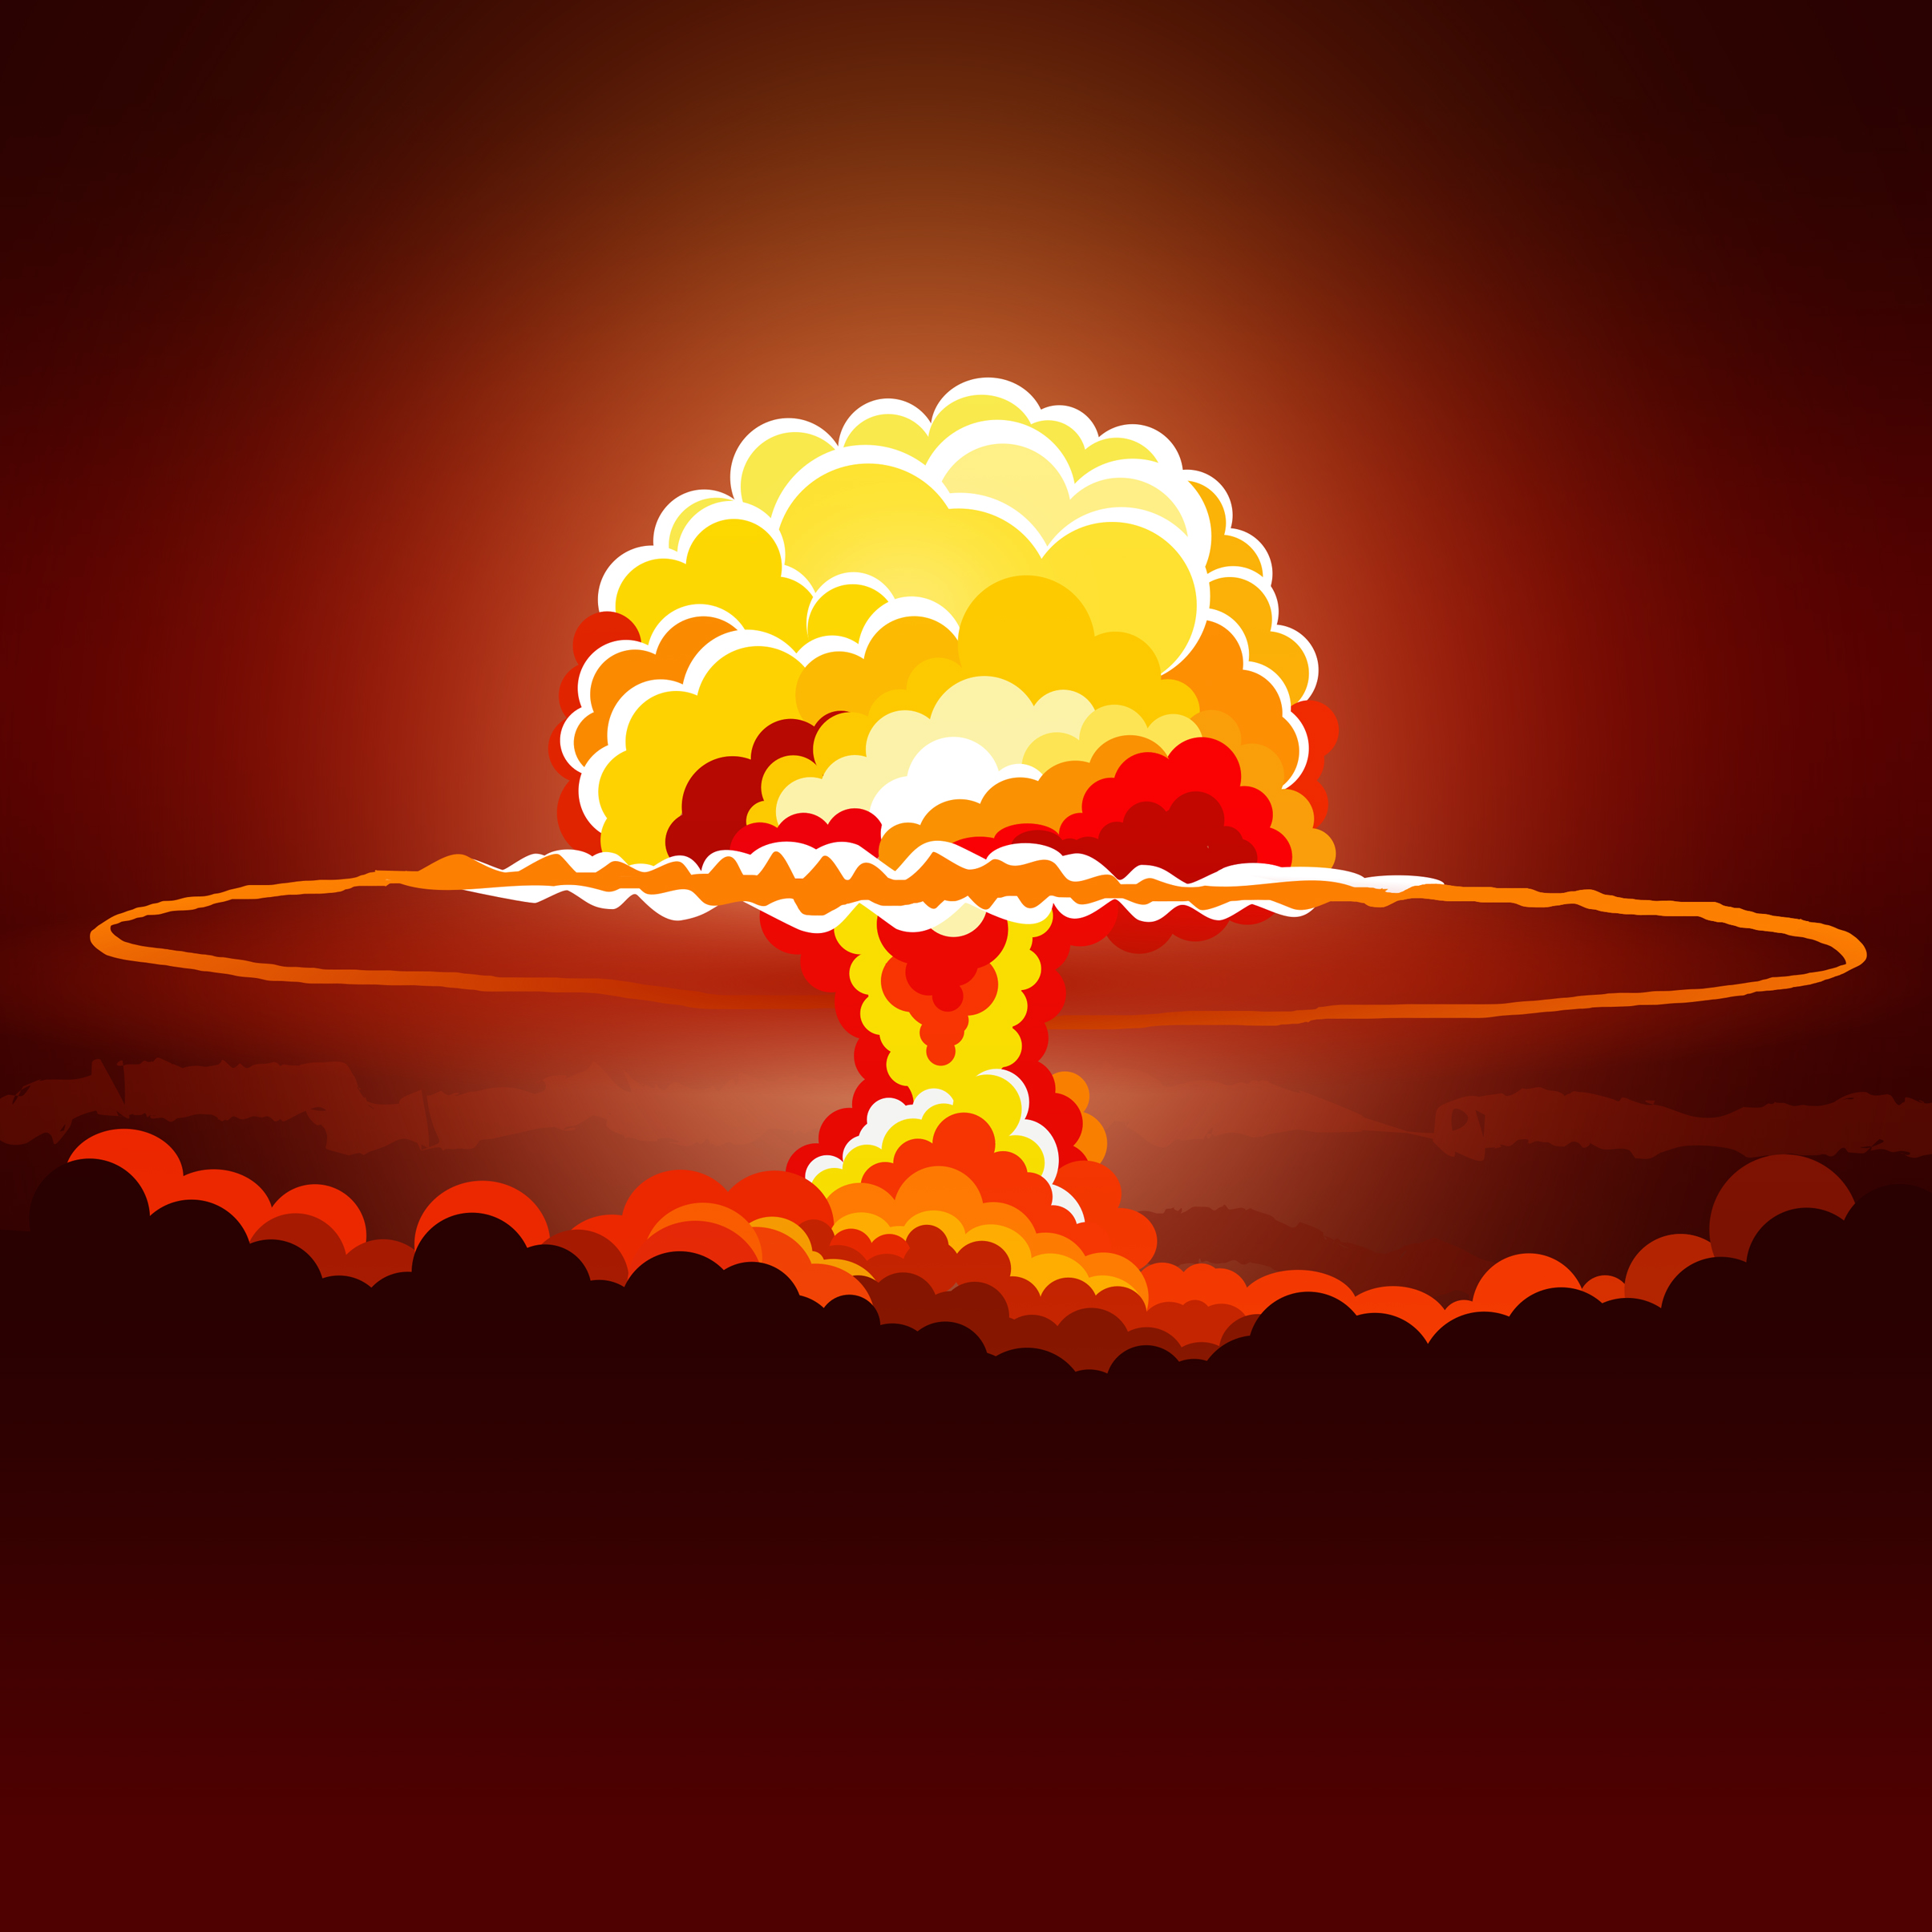 Nuclear explosion - illustration photo